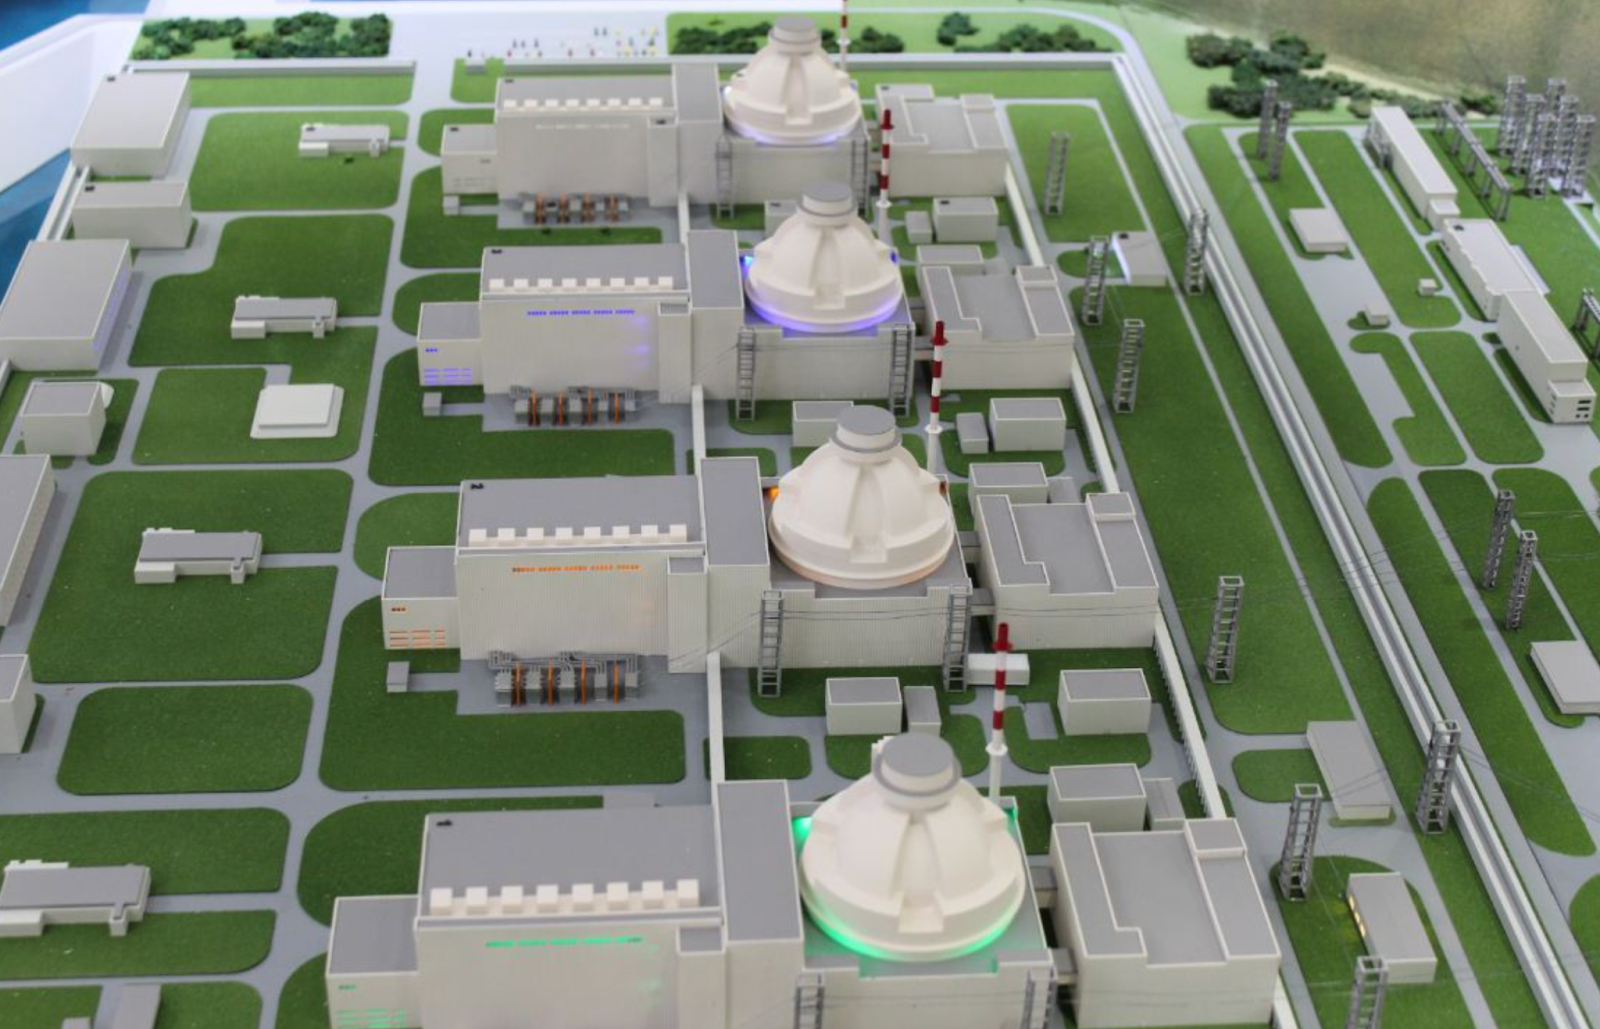 Akkuyu Nuclear Power Plant - turkey vision 2023